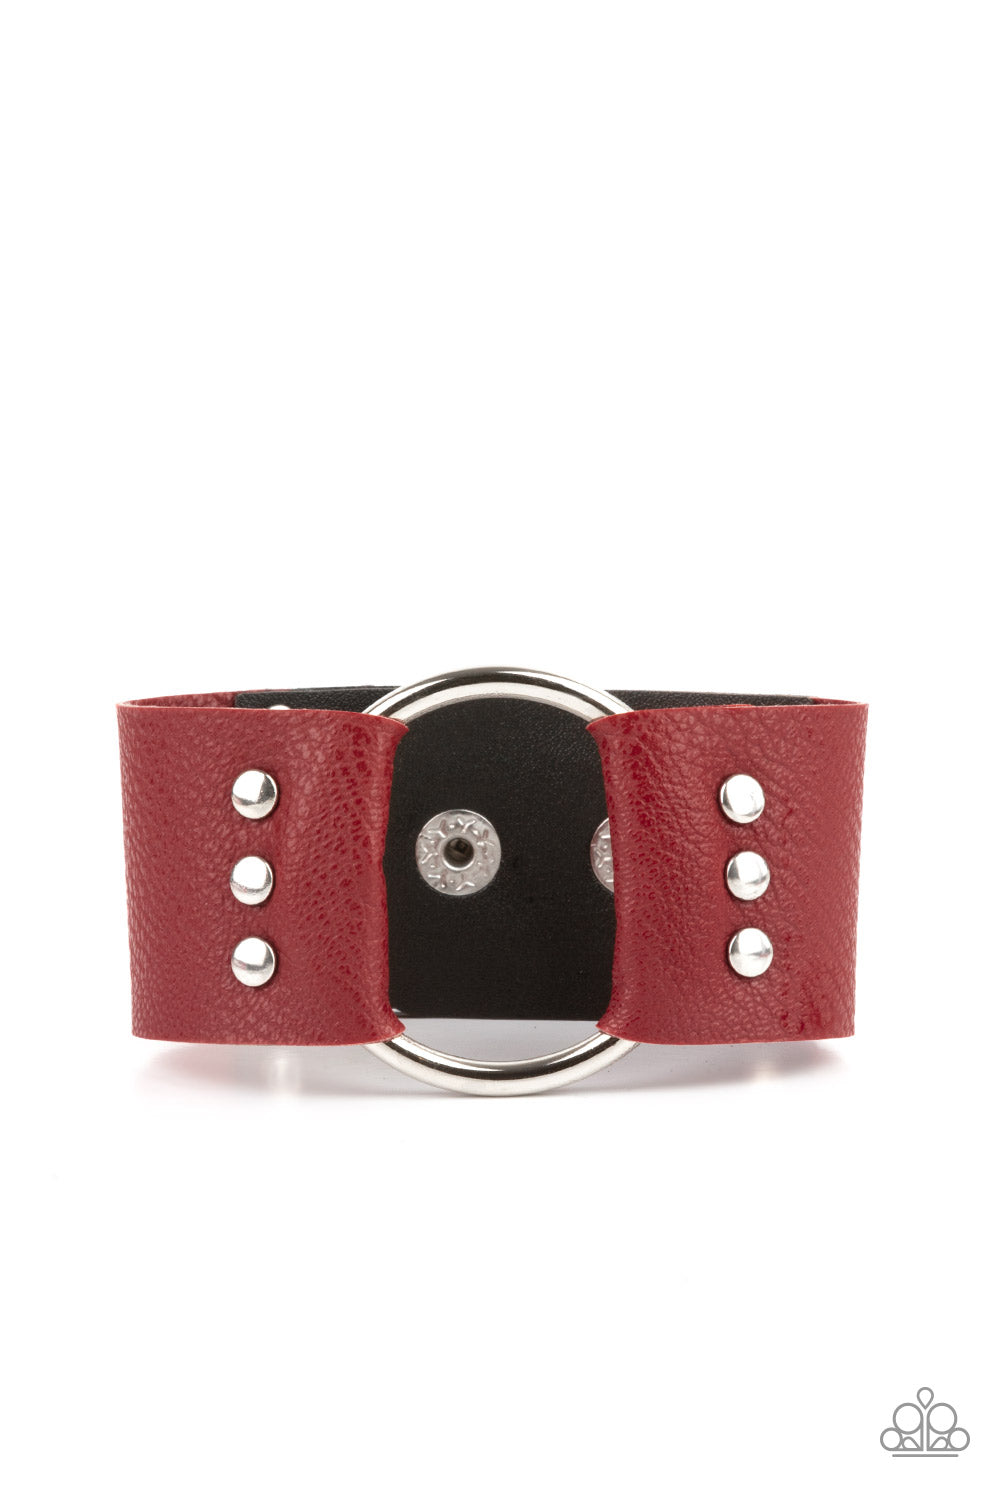 Moto Mayhem - Red & Black Snap Bracelet - Princess Glam Shop